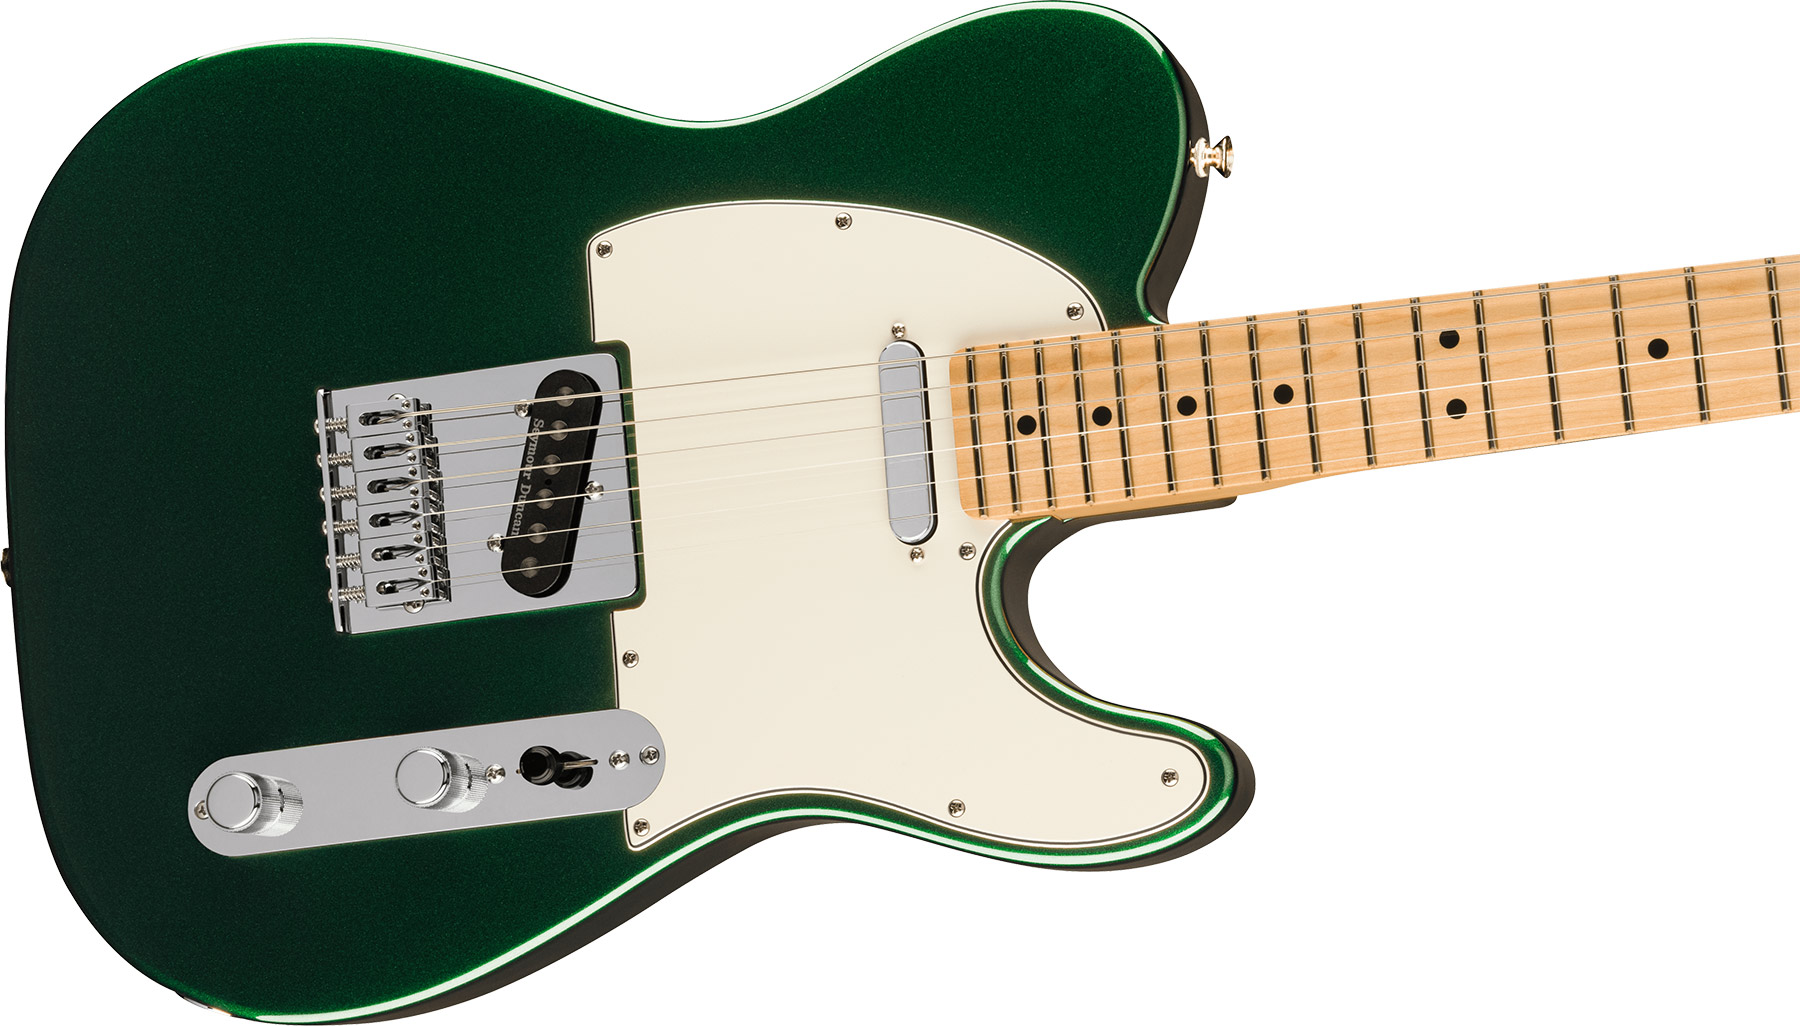 Fender Tele Player Ltd Mex 2s Seymour Duncan Mn - British Racing Green - Tel shape electric guitar - Variation 2